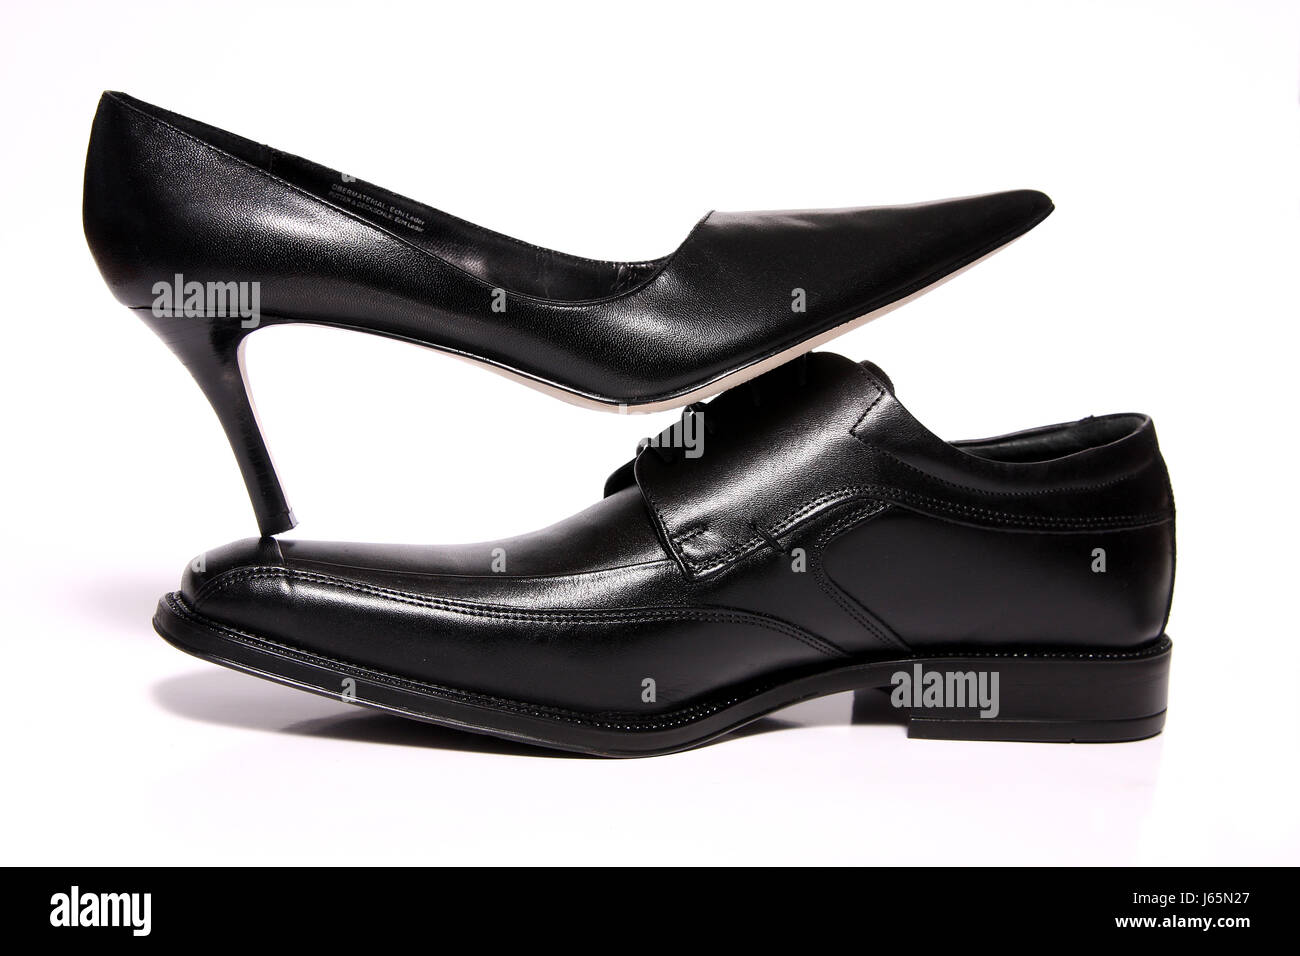 Highheels Schnürsenkel Pumpen Heels schwarze dunkelhäutige kohlschwarze tief schwarze Schuhe Leder Stockfoto